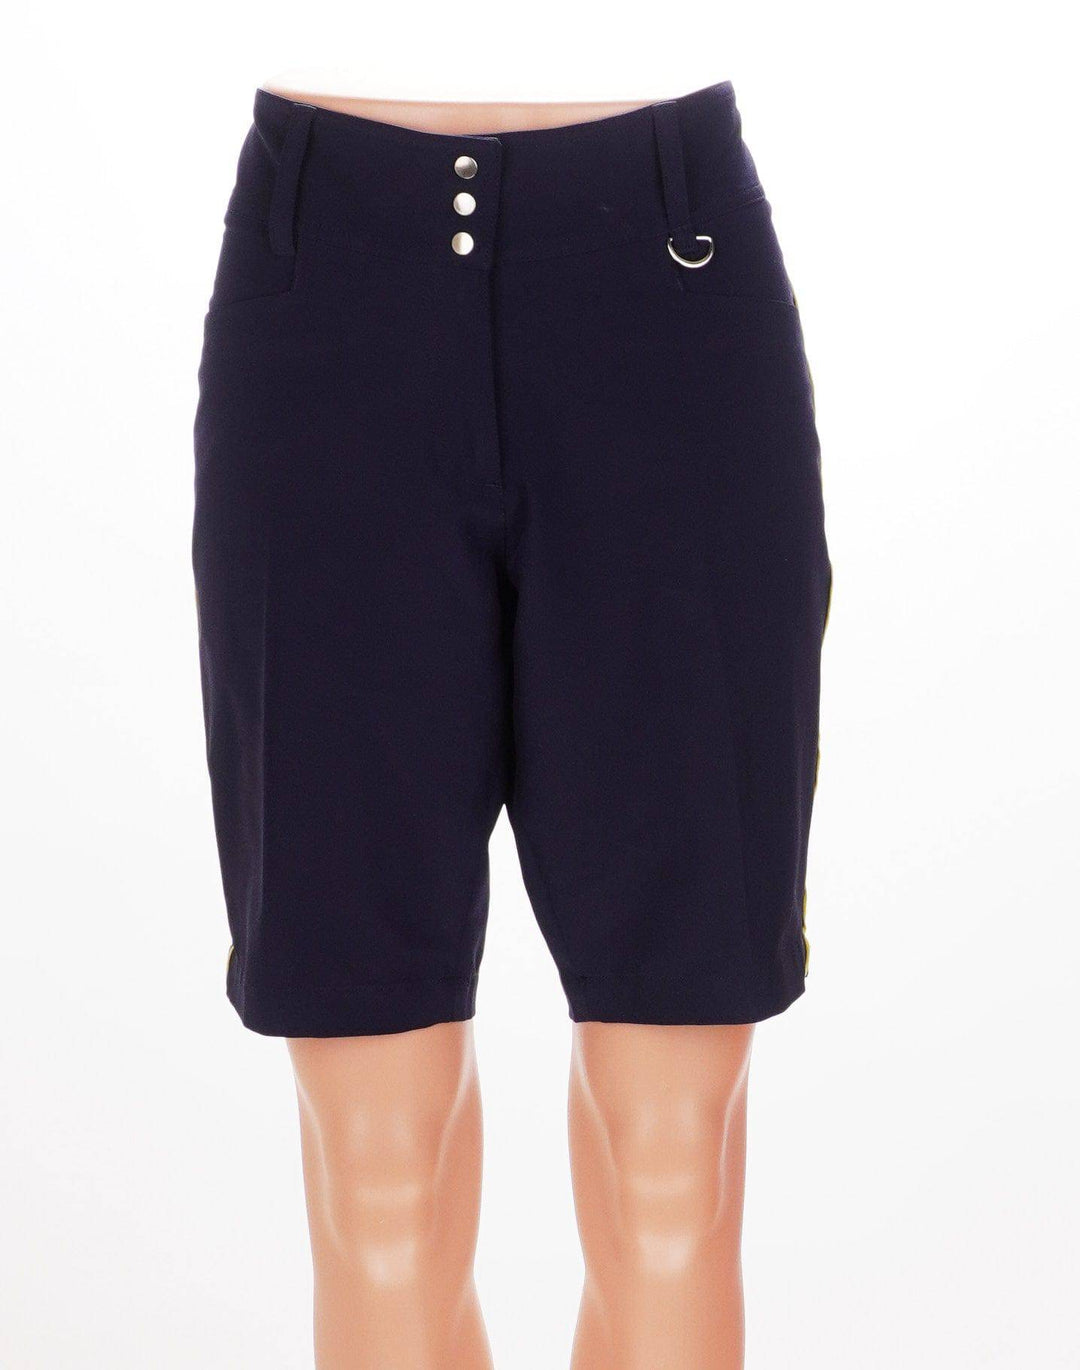 GGblue 6 / Navy / Consigned GG Blue Golf Shorts - Navy - Size 6